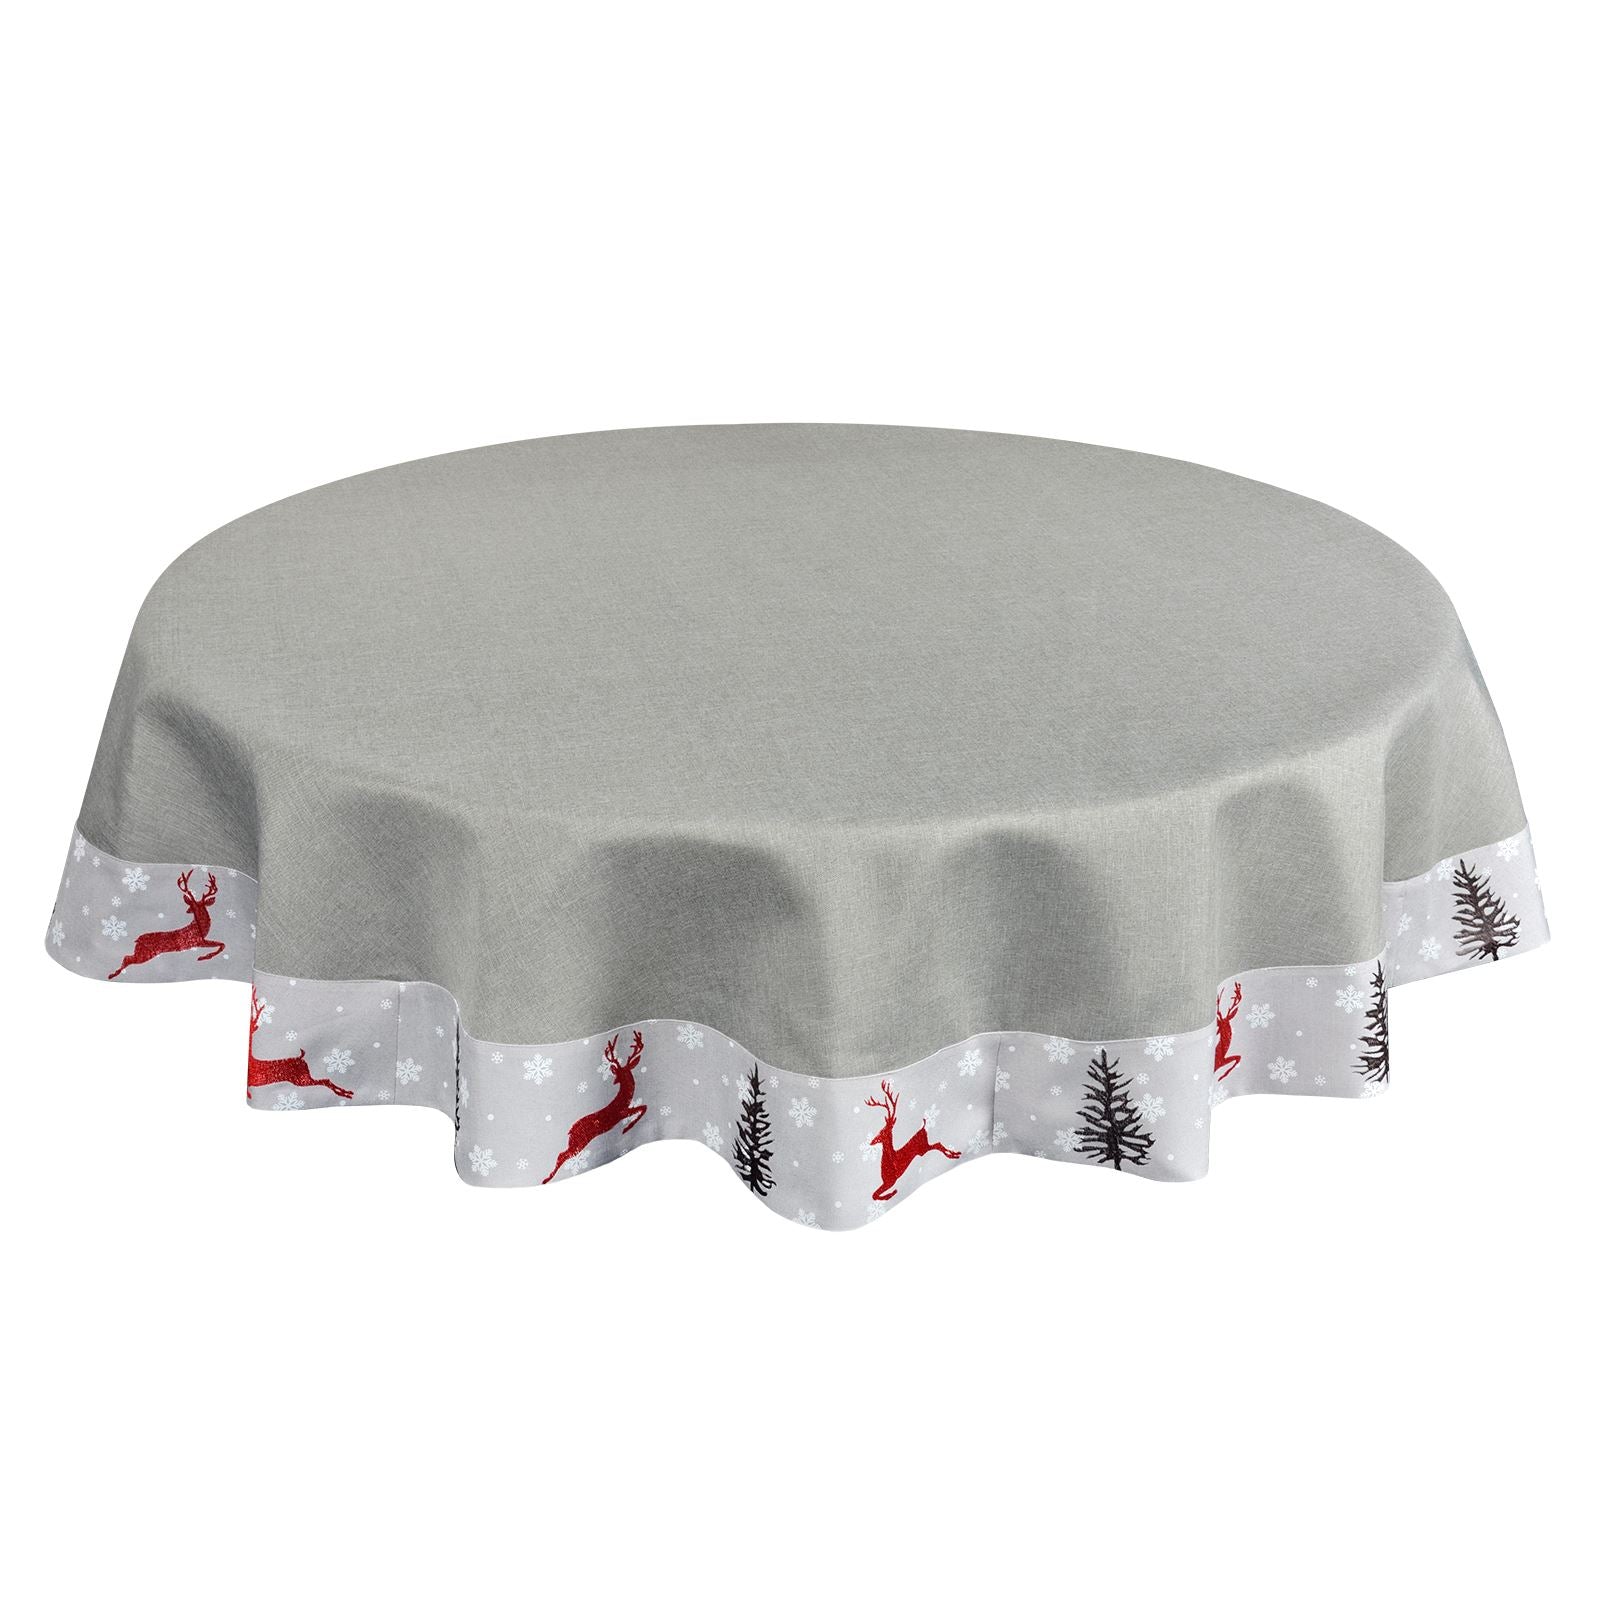 Mr Crimbo Reindeer Embroidered Grey Tablecloth/Napkin - MrCrimbo.co.uk -XS4796 - 70" Round -christmas table